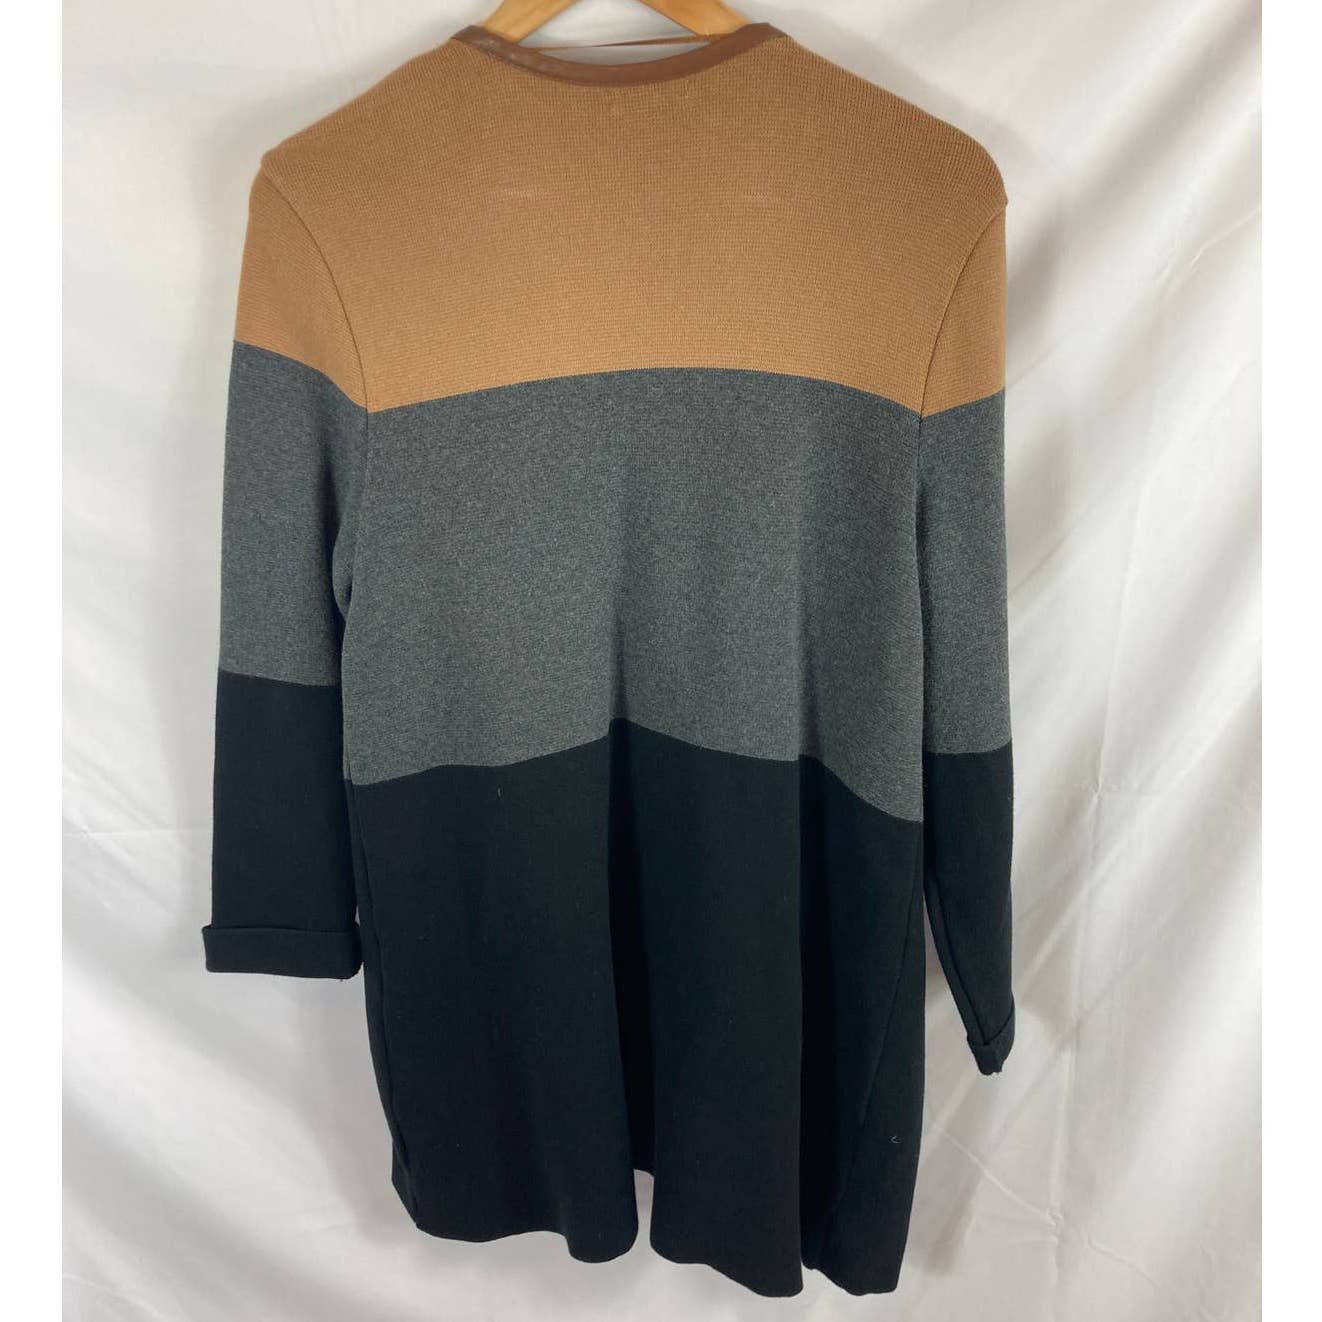 Popular Charter Club Striped Longline sweater jacket size XL p76pzCEBj Great